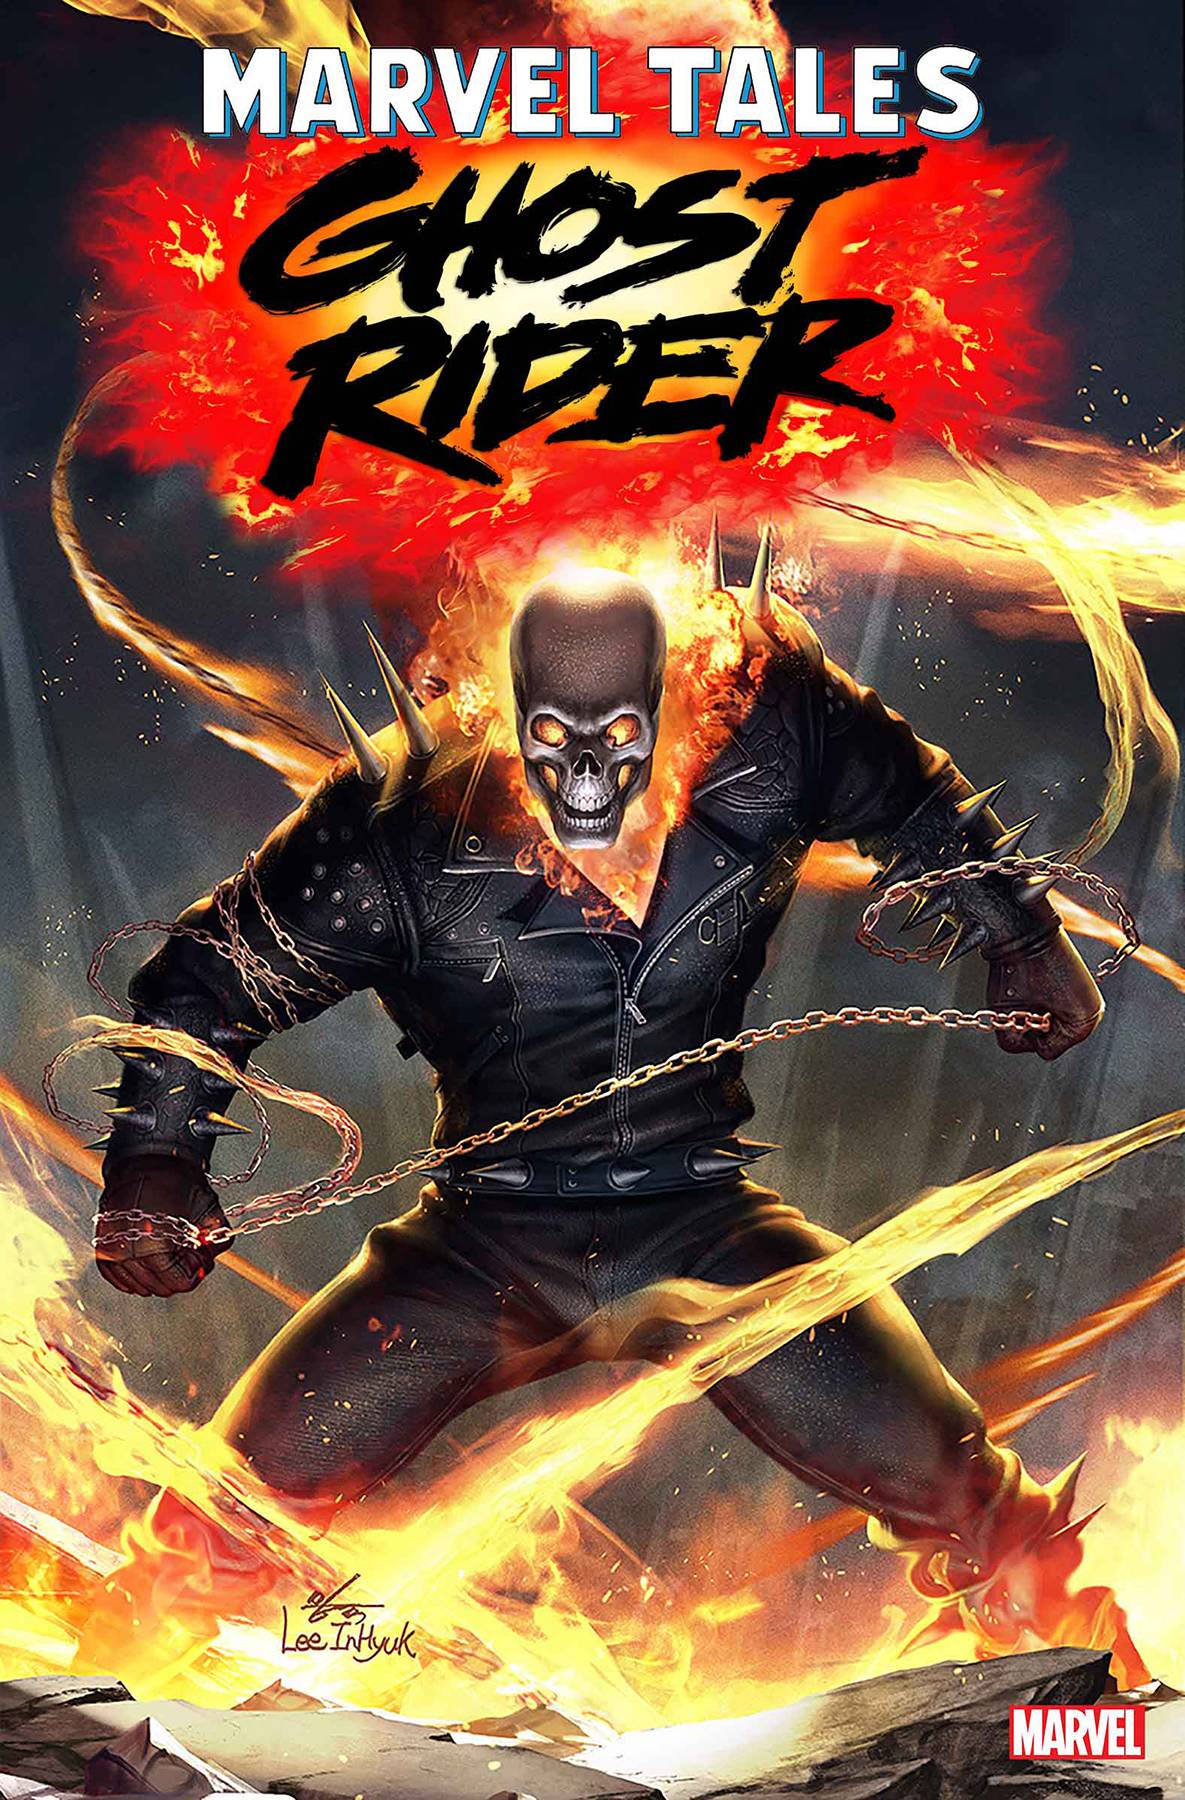 Marvel Tales Ghost Rider #1